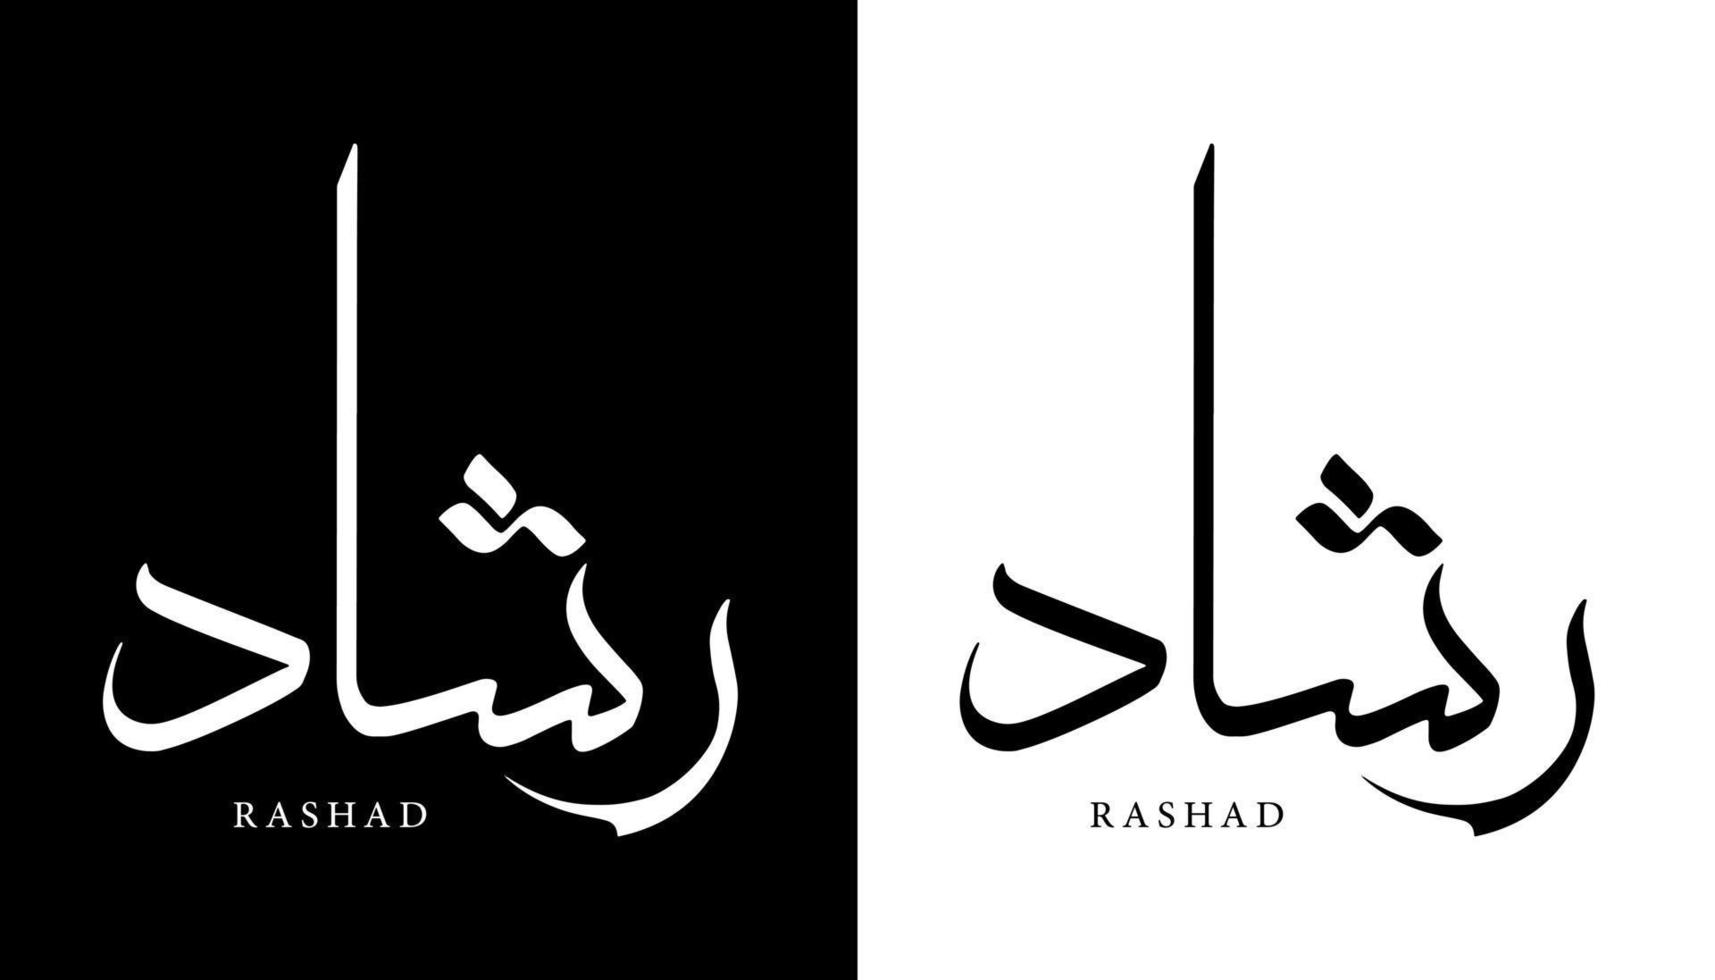 calligraphie arabe nom traduit 'rashad' lettres arabes alphabet police lettrage logo islamique illustration vectorielle vecteur